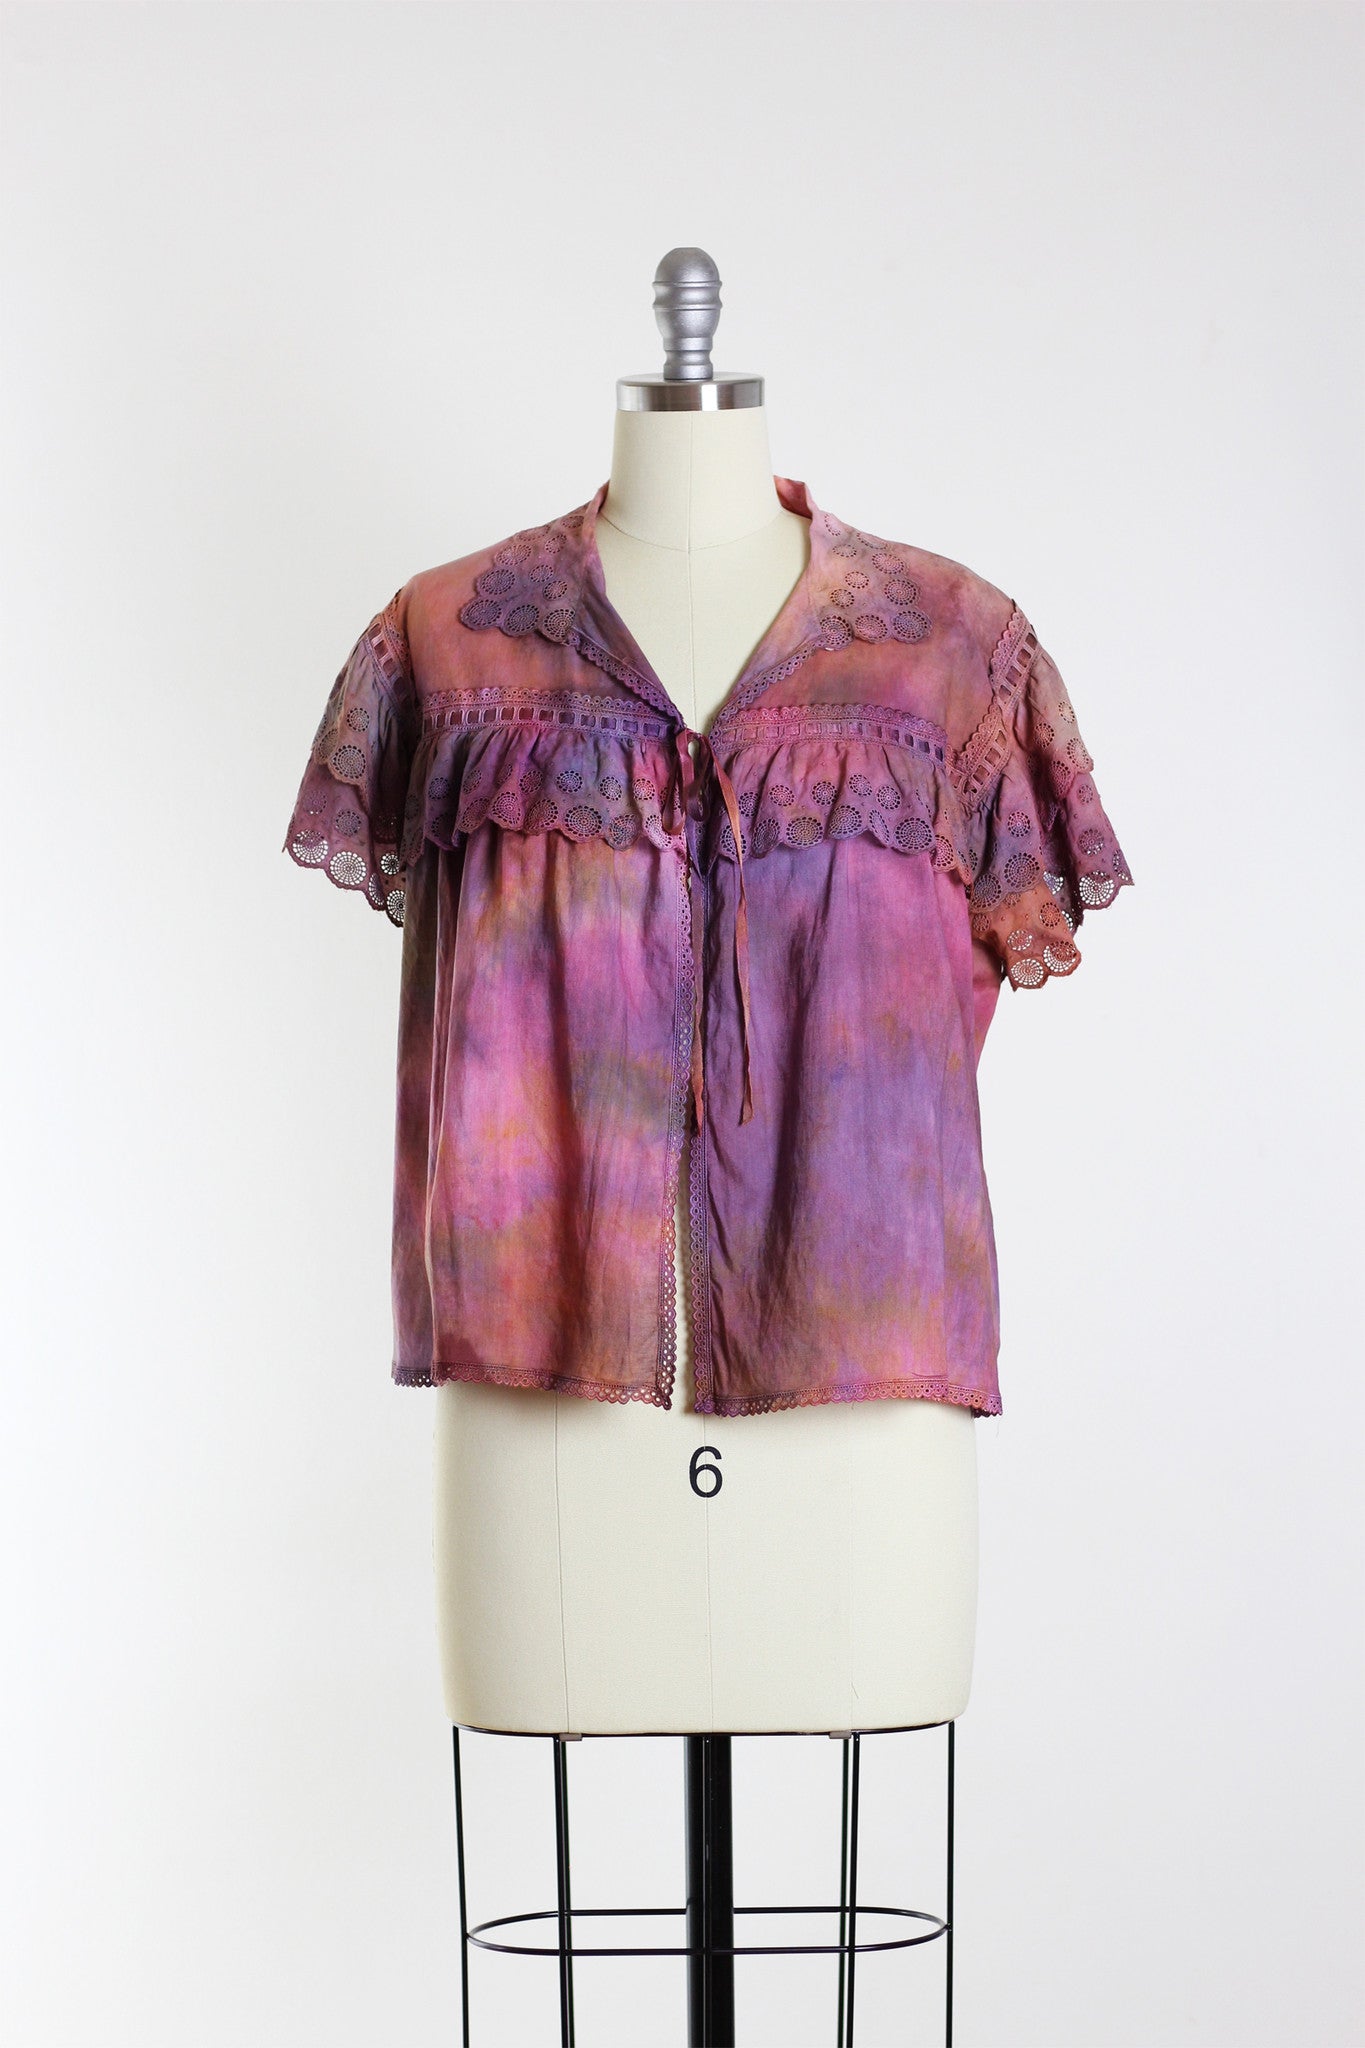 Vintage 1910's Edwardian Tie-Dye Cotton Lace Blouse